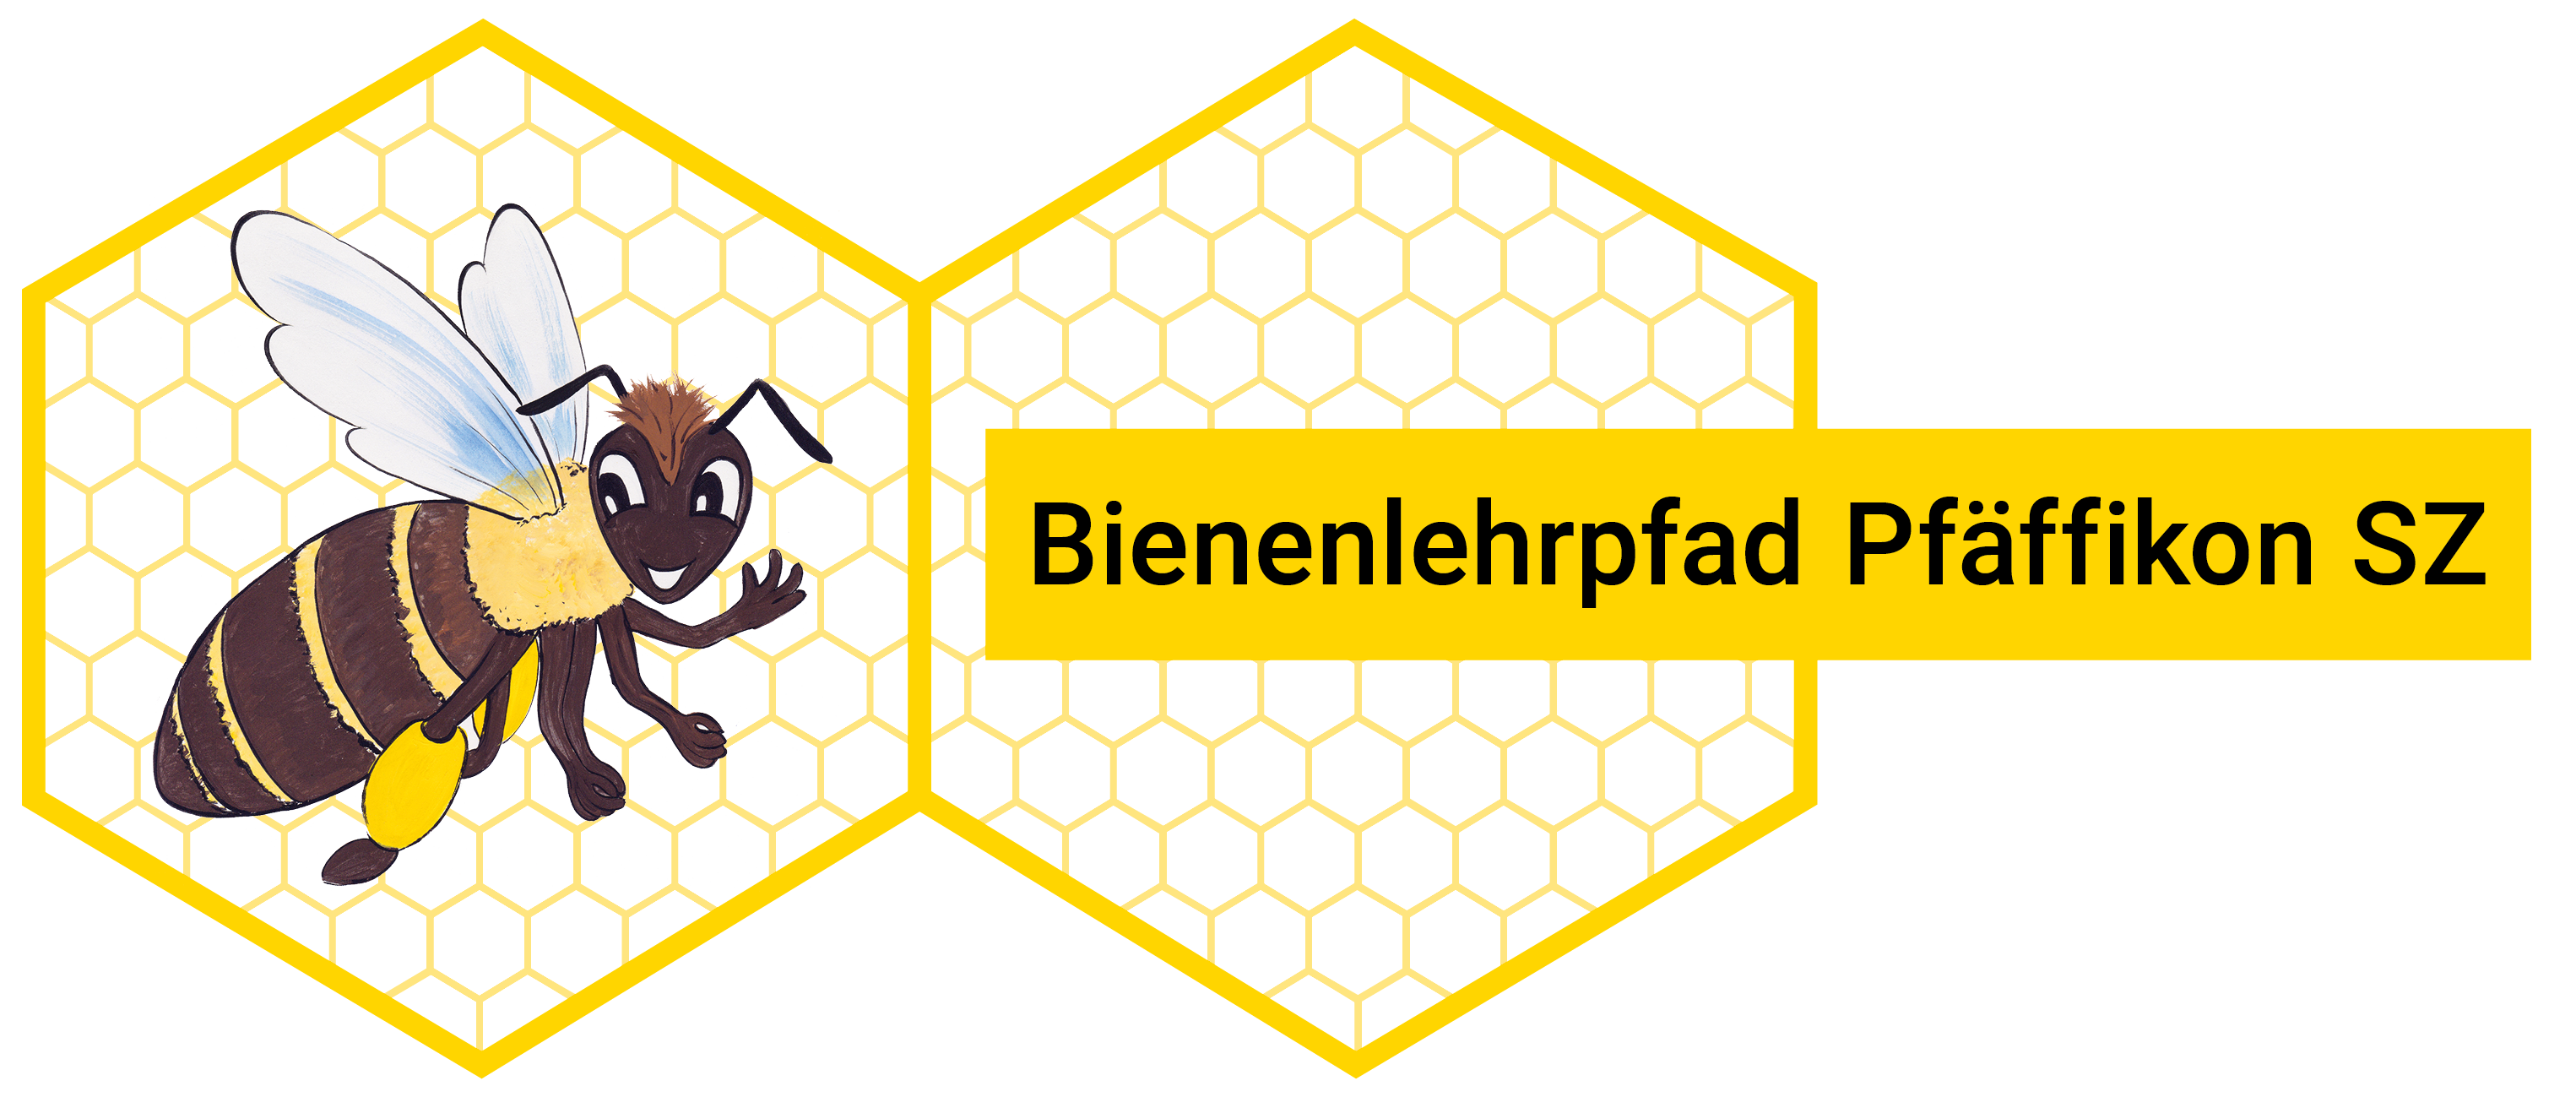 Logo Bienenlehrpfad Pfäffikon SZ